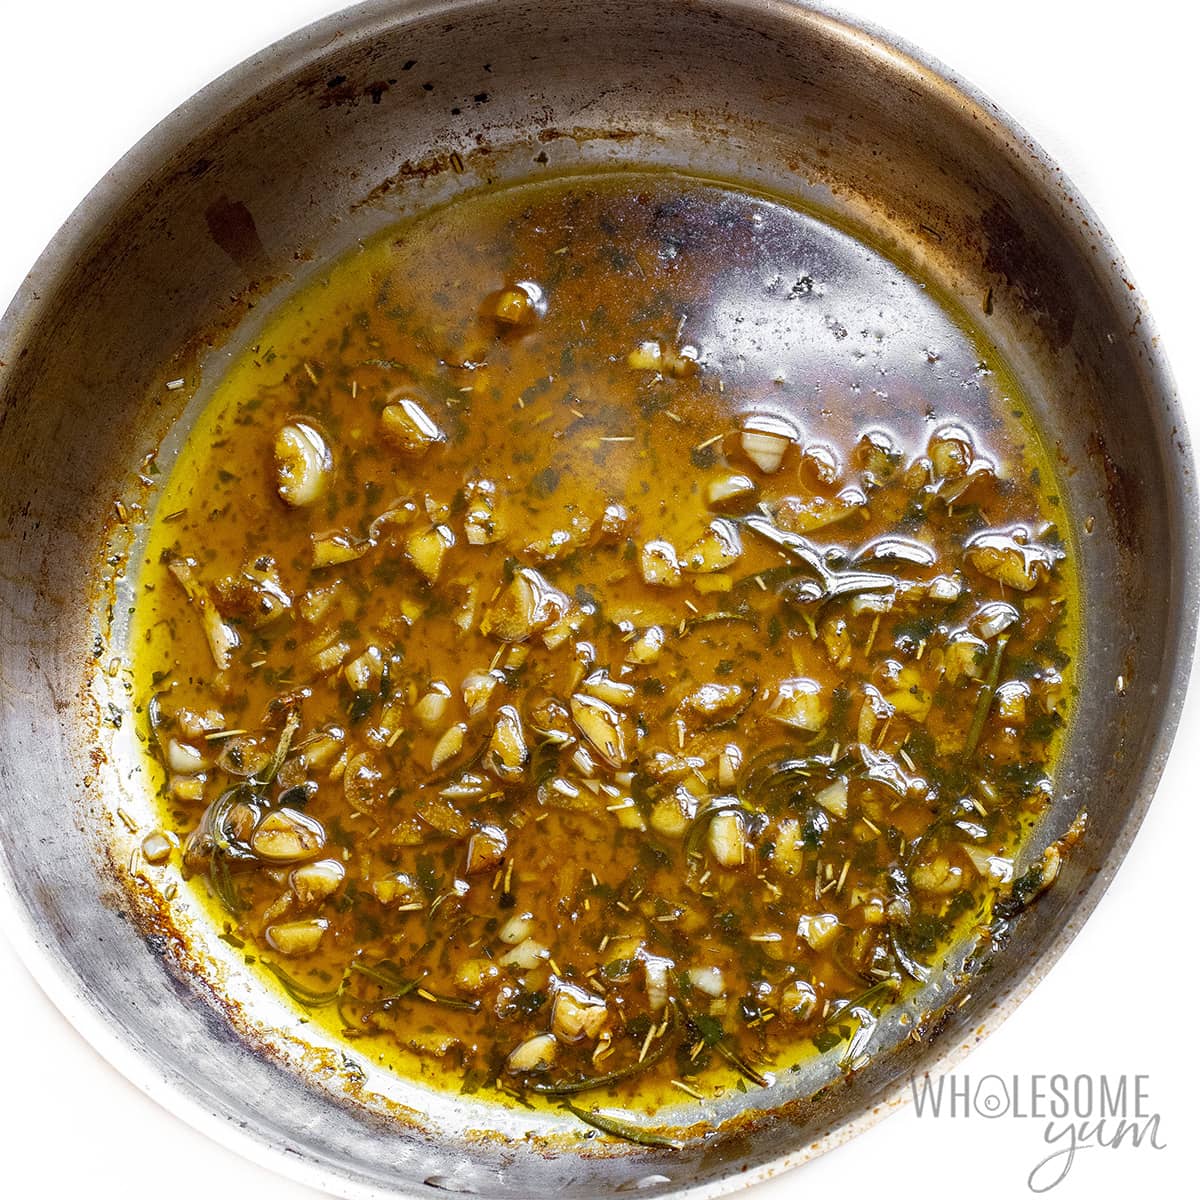 Sauteing the garlic in sauce.